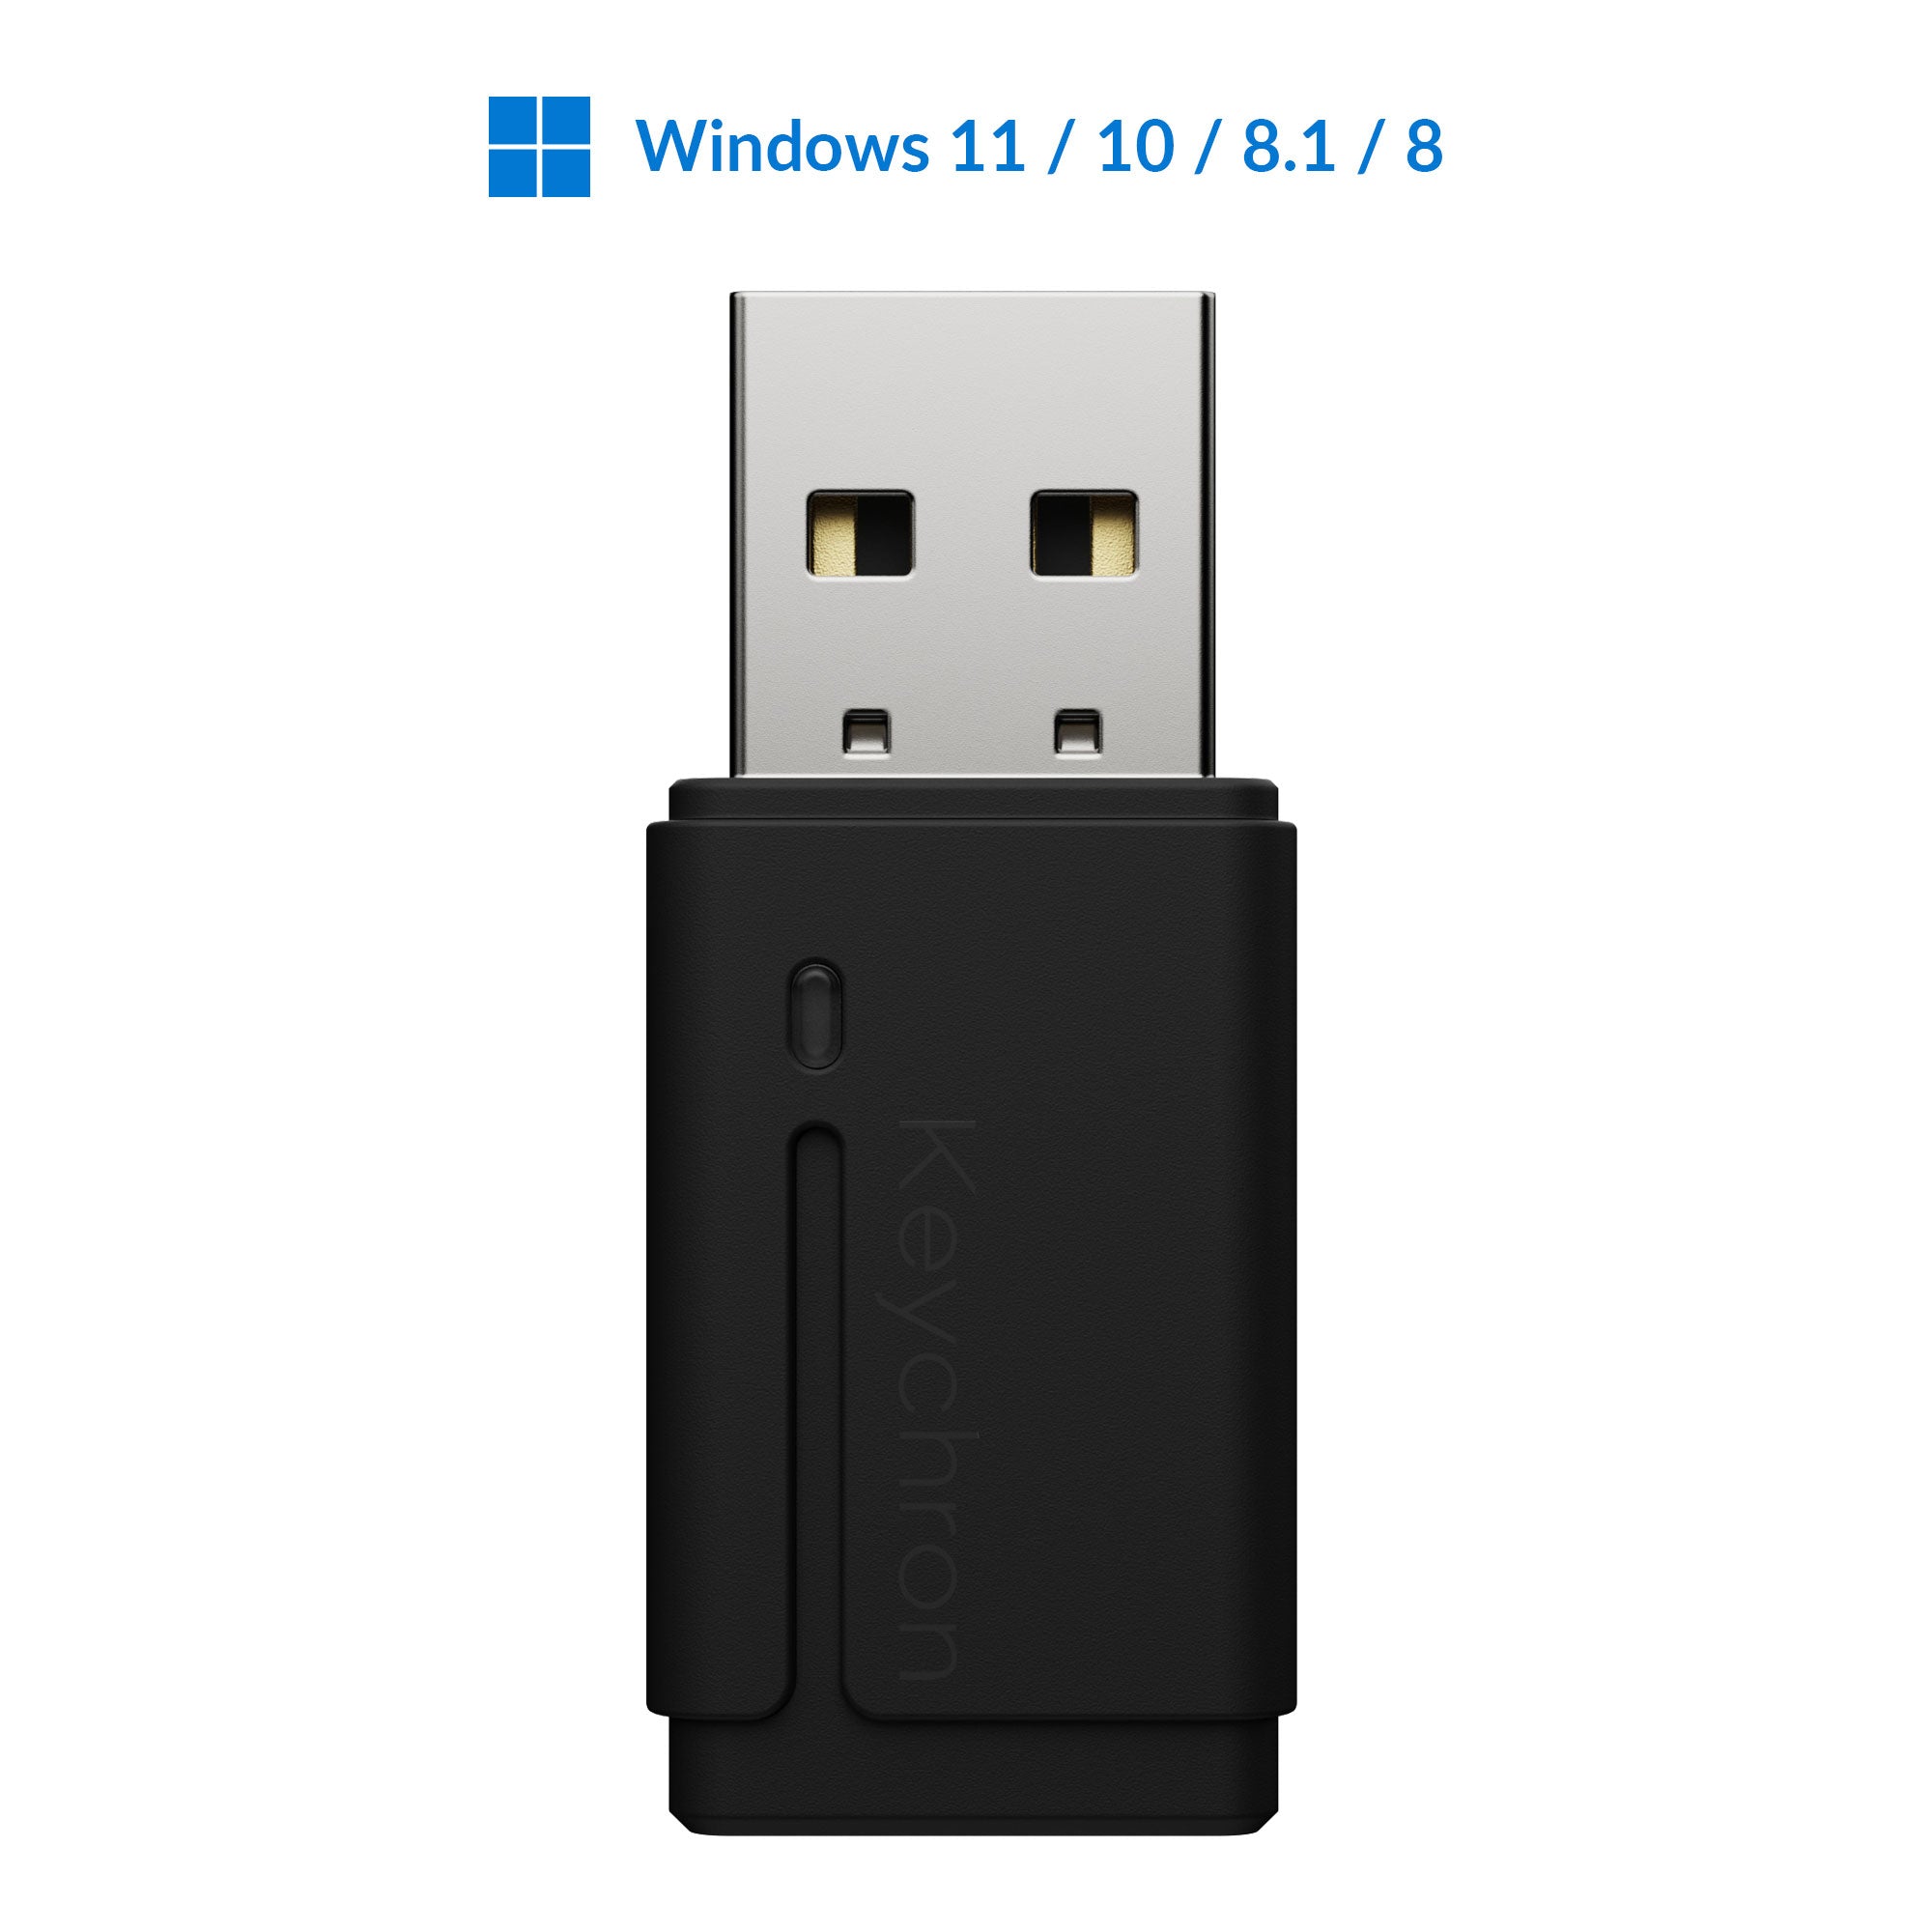 Han Alaska deform Keychron USB Bluetooth Adapter for Windows PC